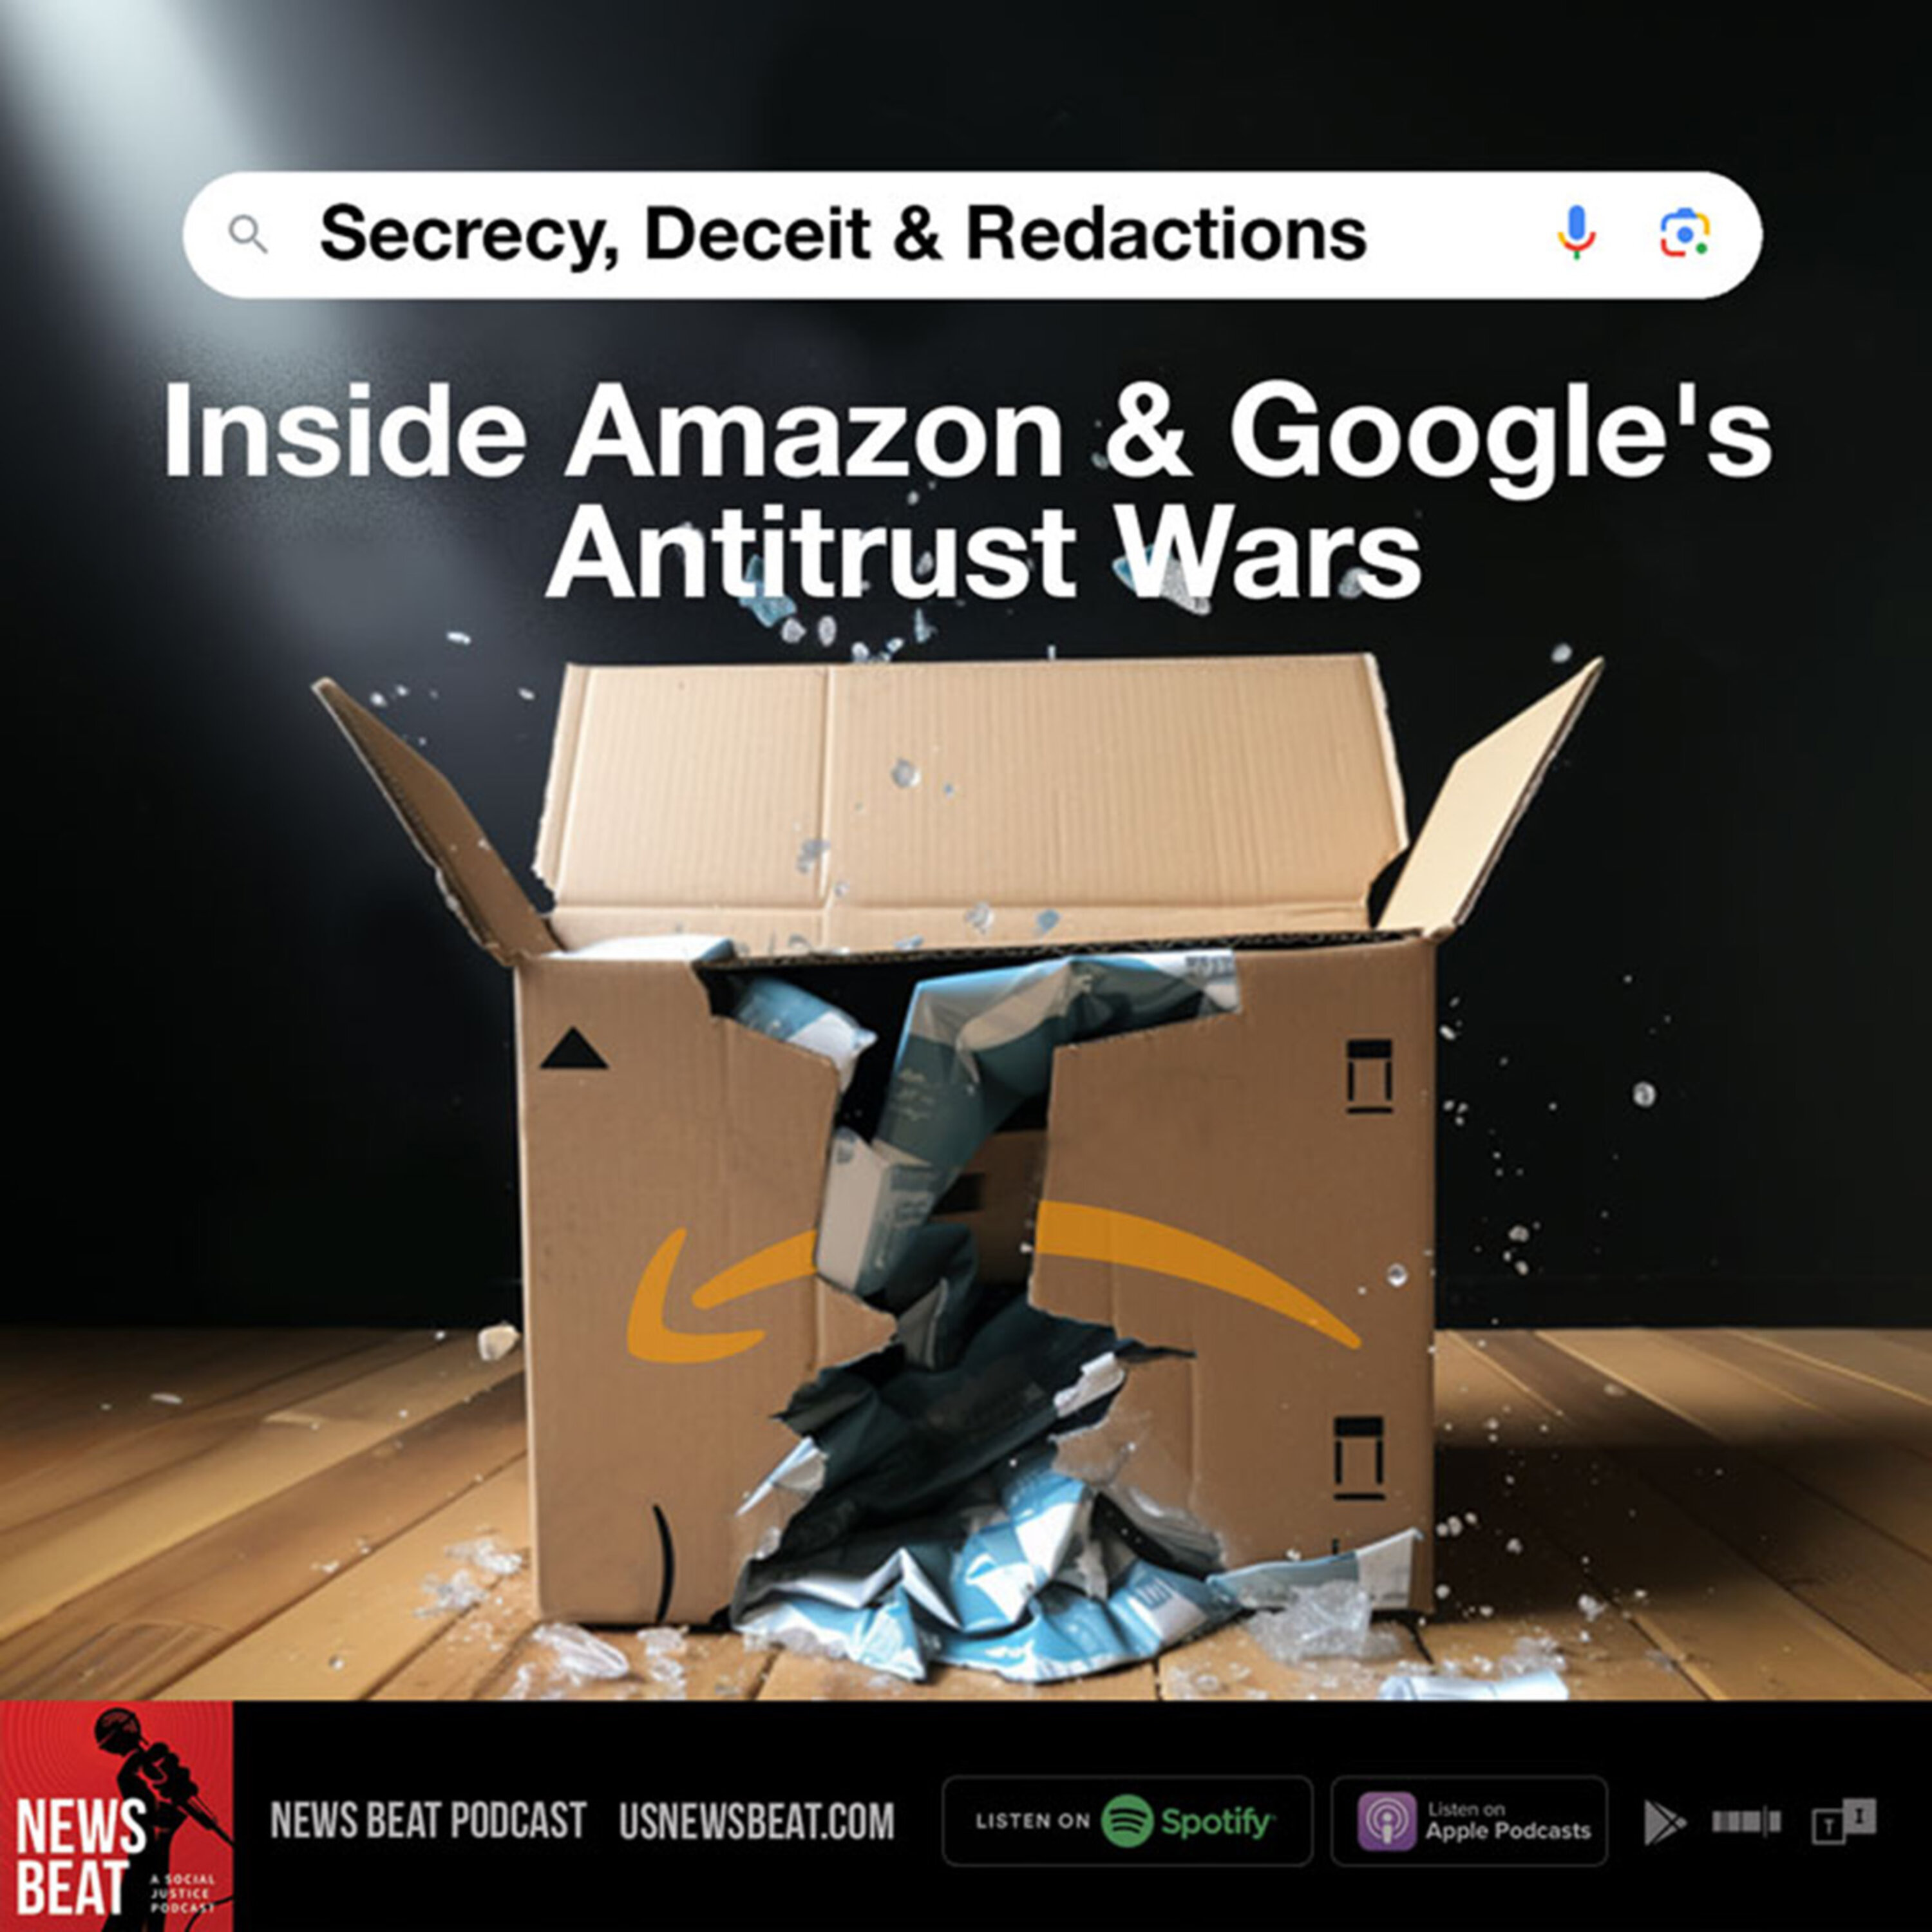 Secrecy, Deceit & Redactions: Inside Amazon & Google's Antitrust Wars (With David Dayen)